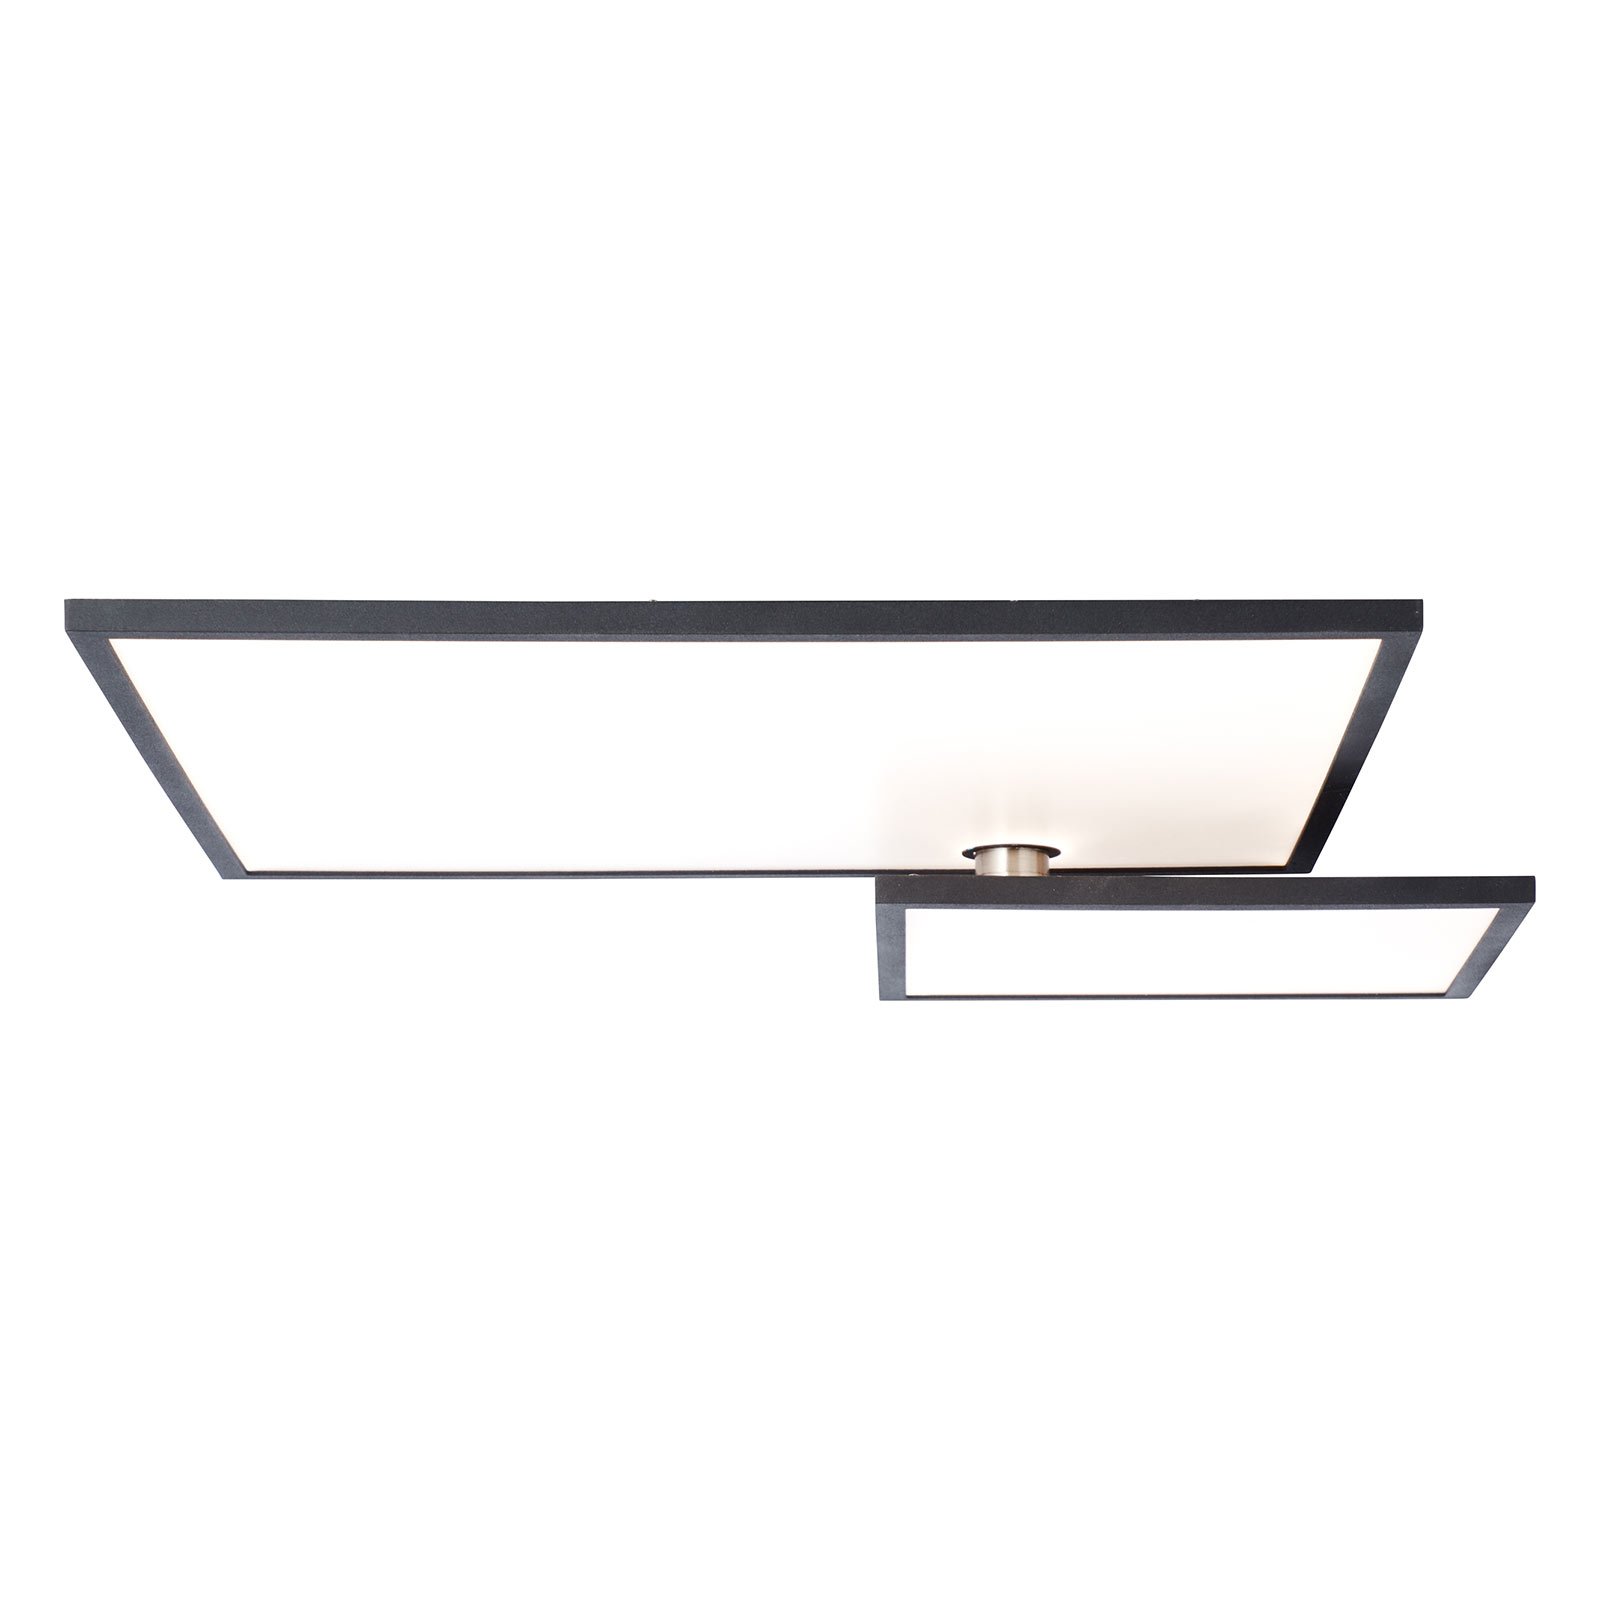 Lampa sufitowa LED Bility prostokątna czarna ramka